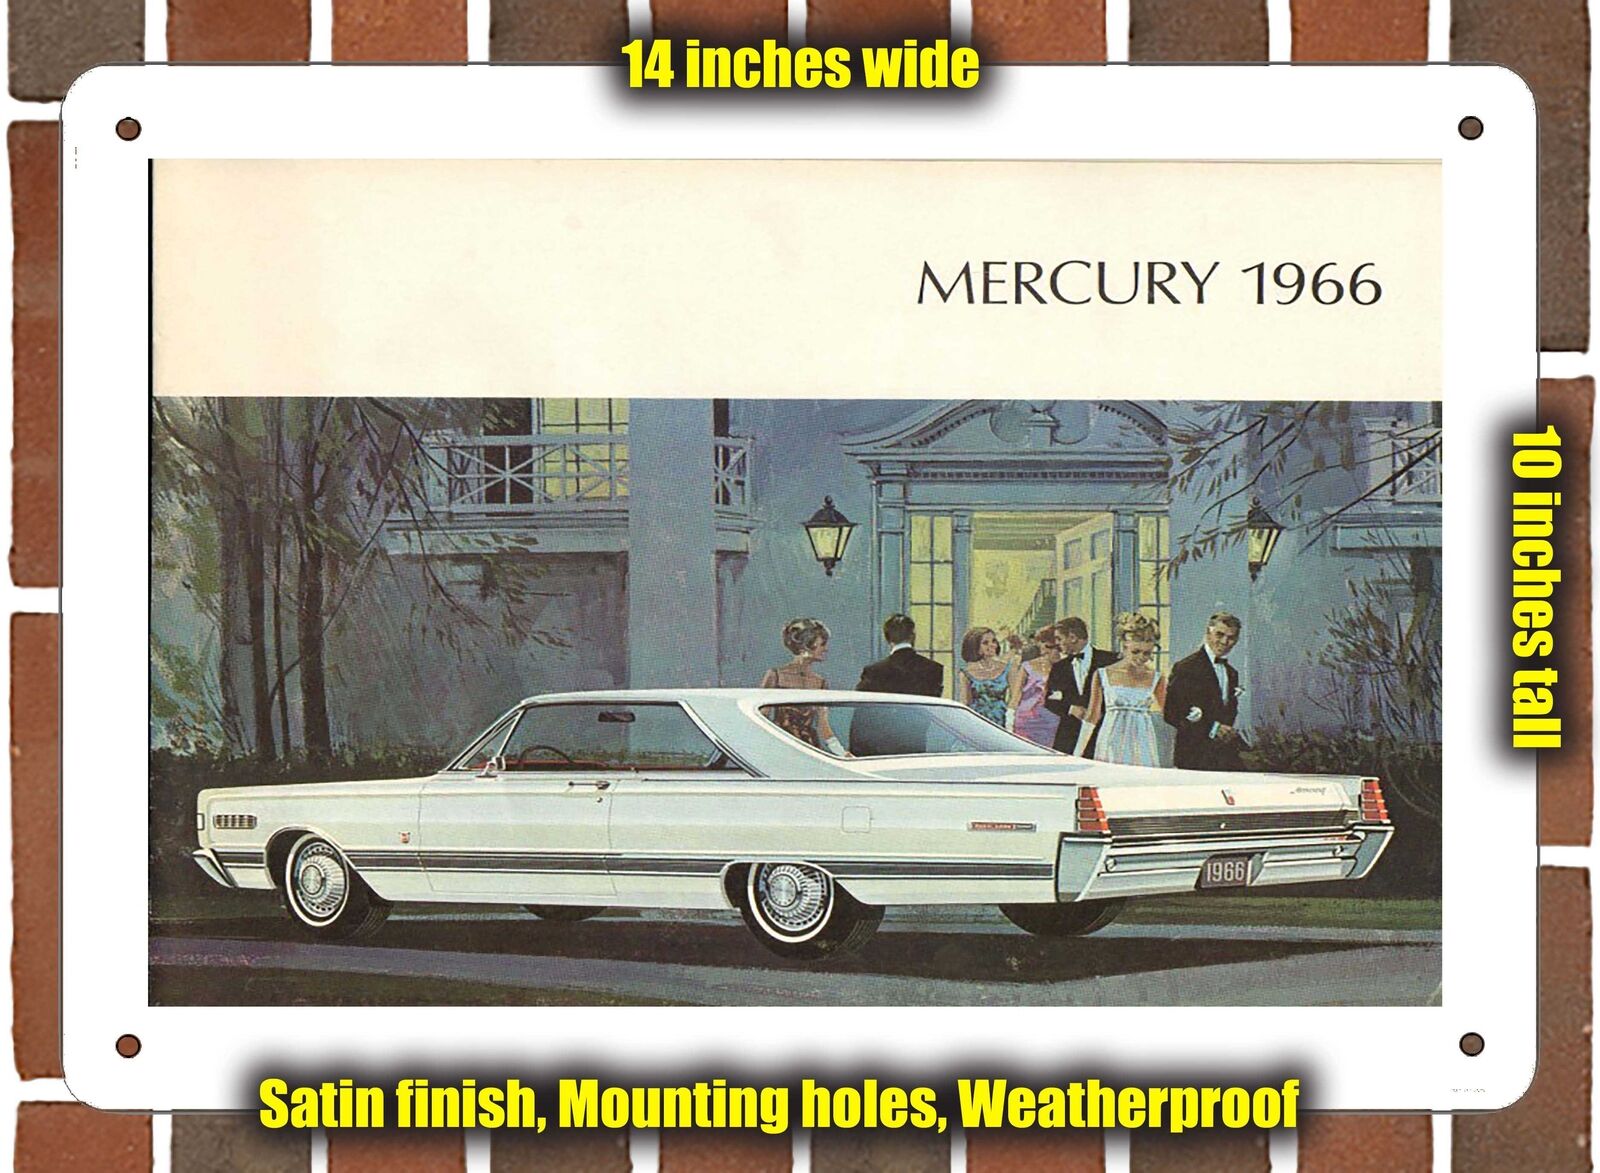 METAL SIGN - 1966 Mercury 1